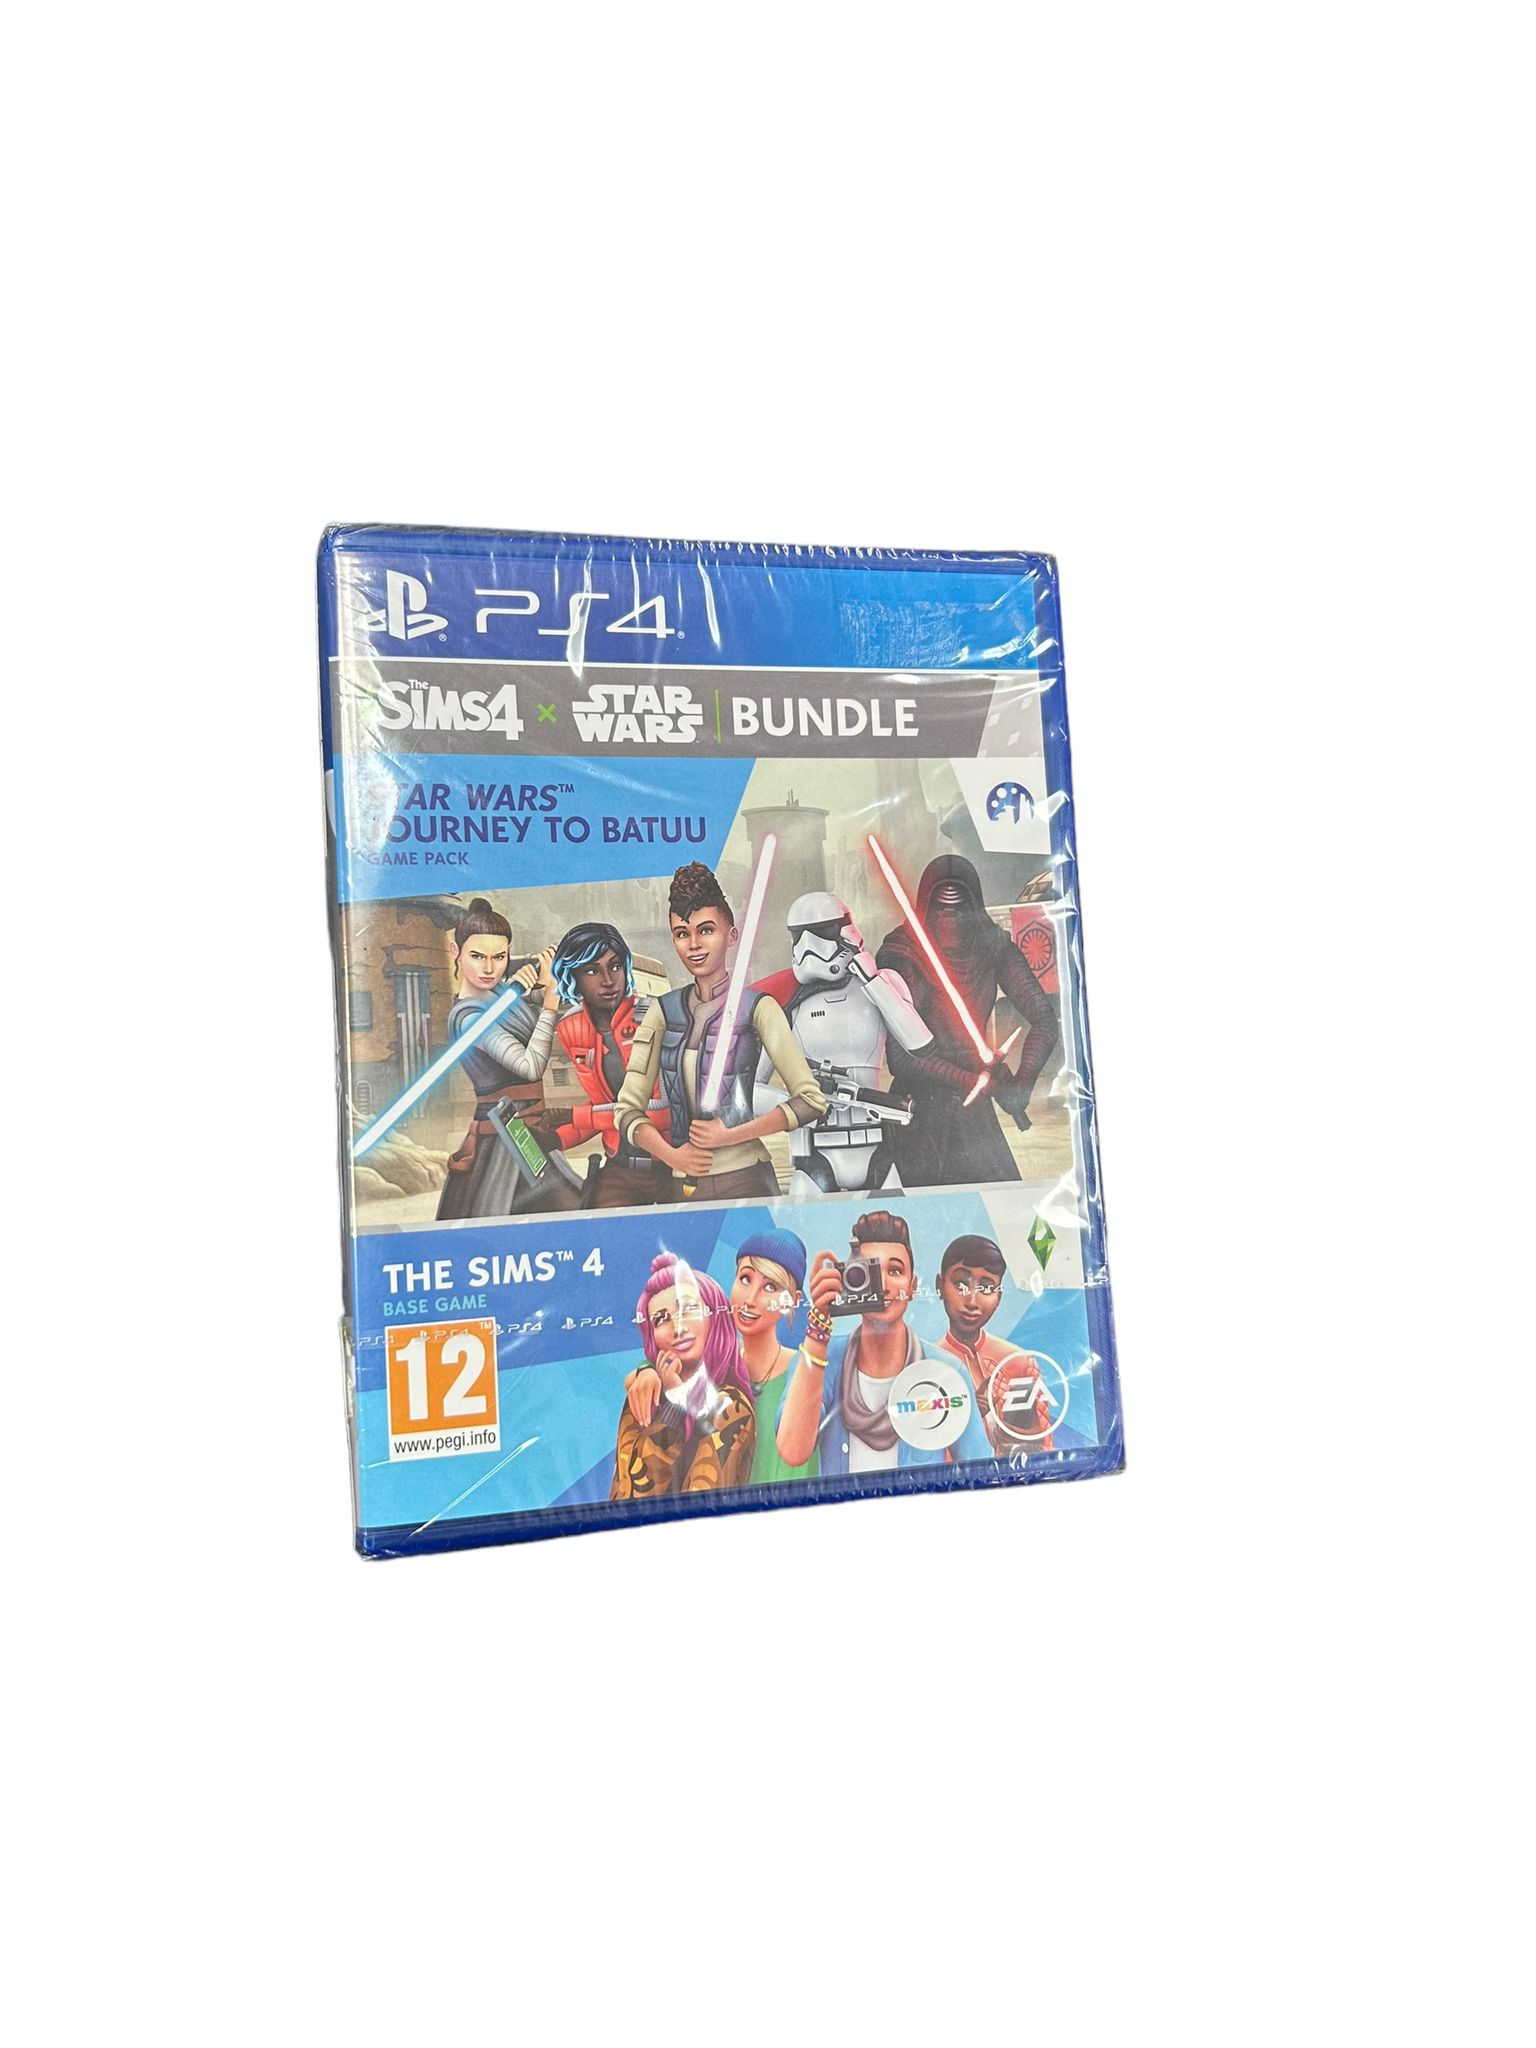 PS4 Sims 4 X Star Wars bundle 